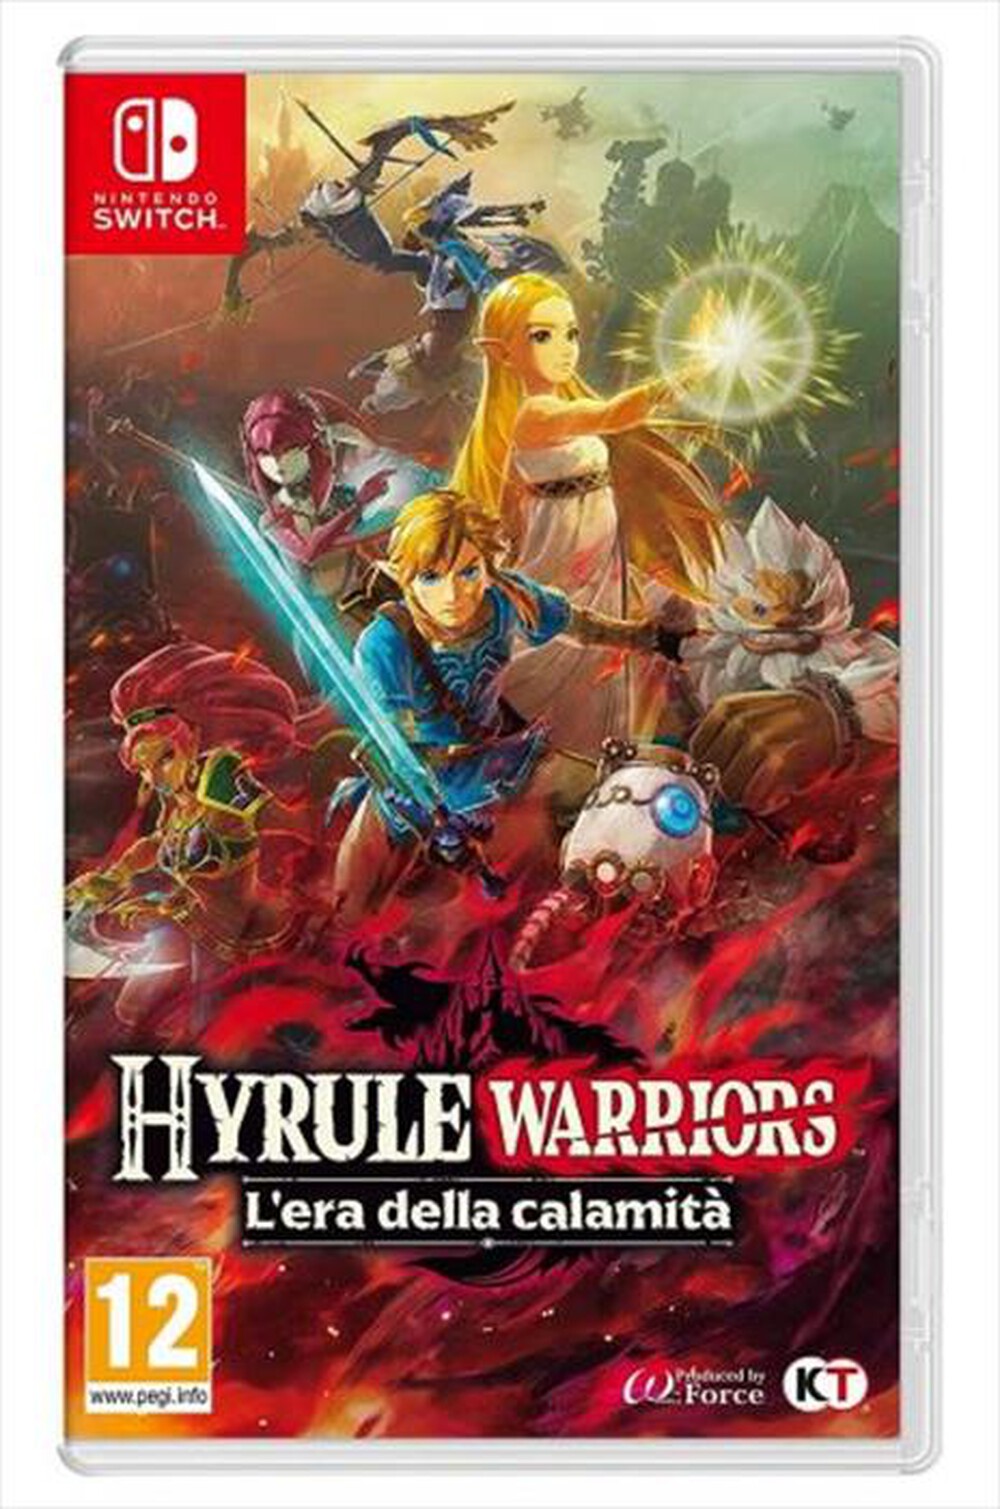 "NINTENDO - Hyrule Warriors: L'era della calamità"